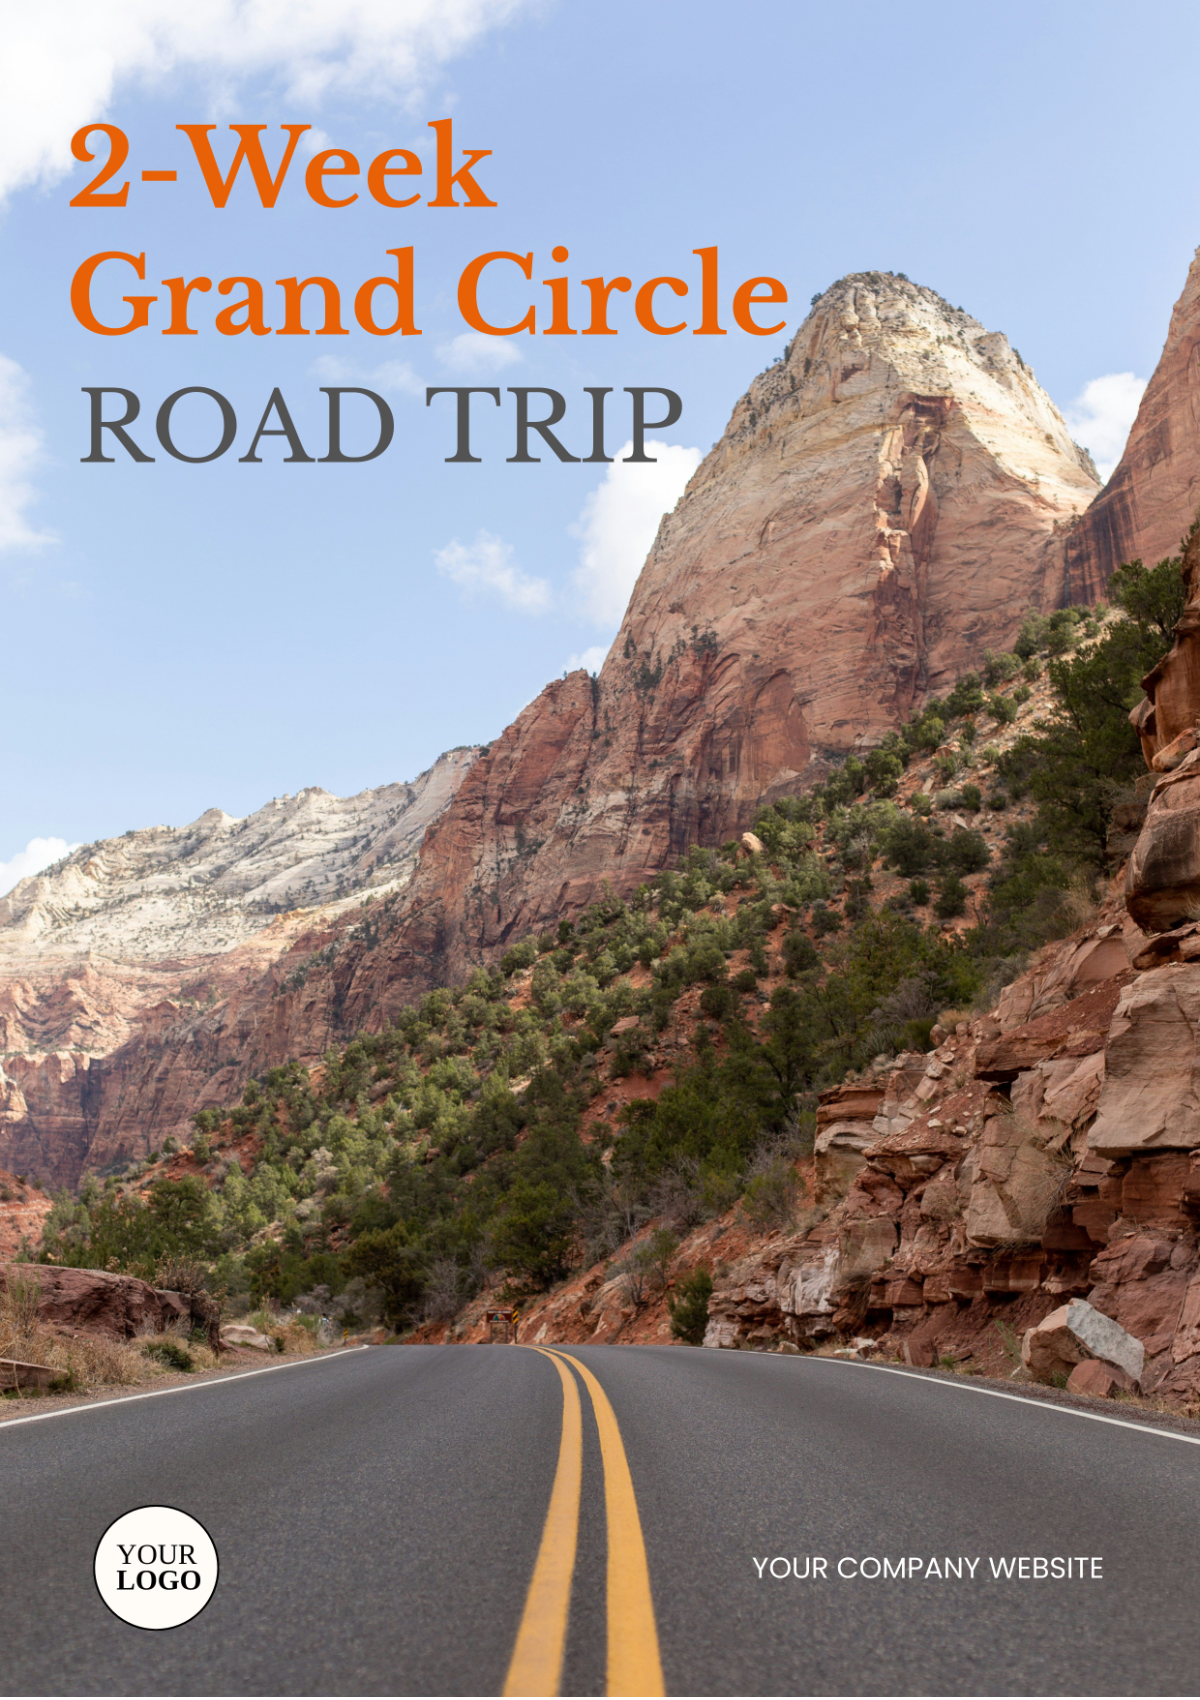 2 Week Grand Circle Road Trip Itinerary Template